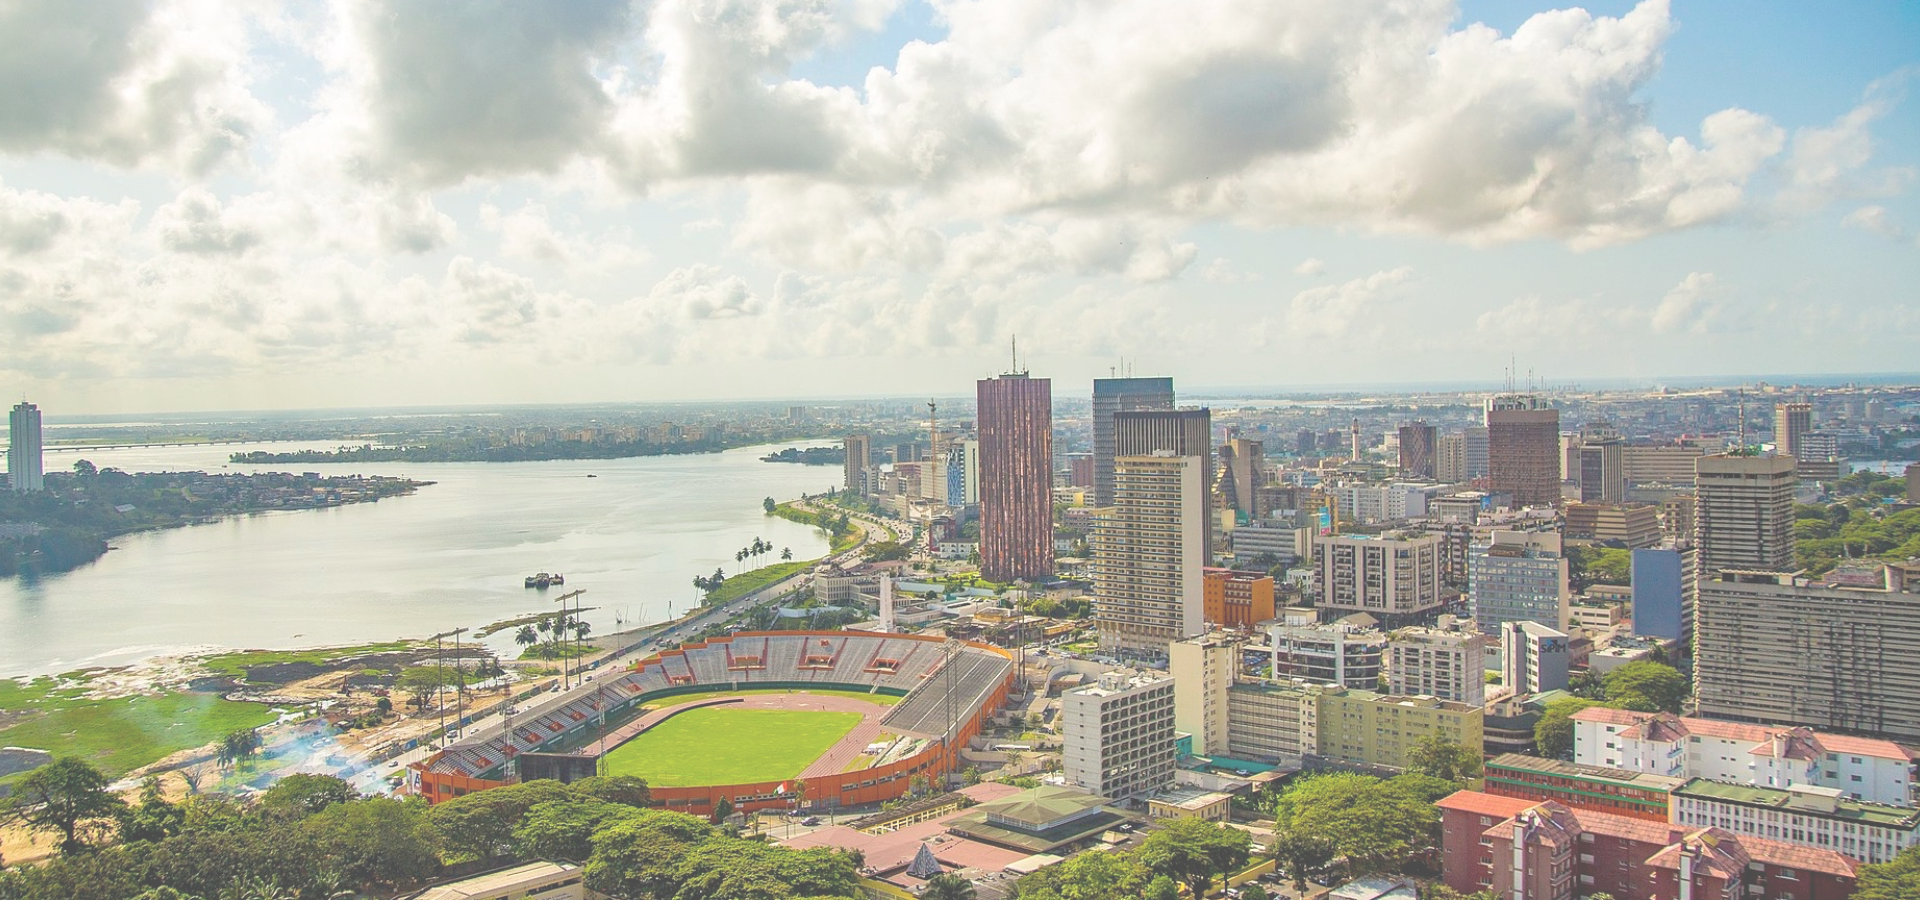 Abidjan City, Ivory Coast